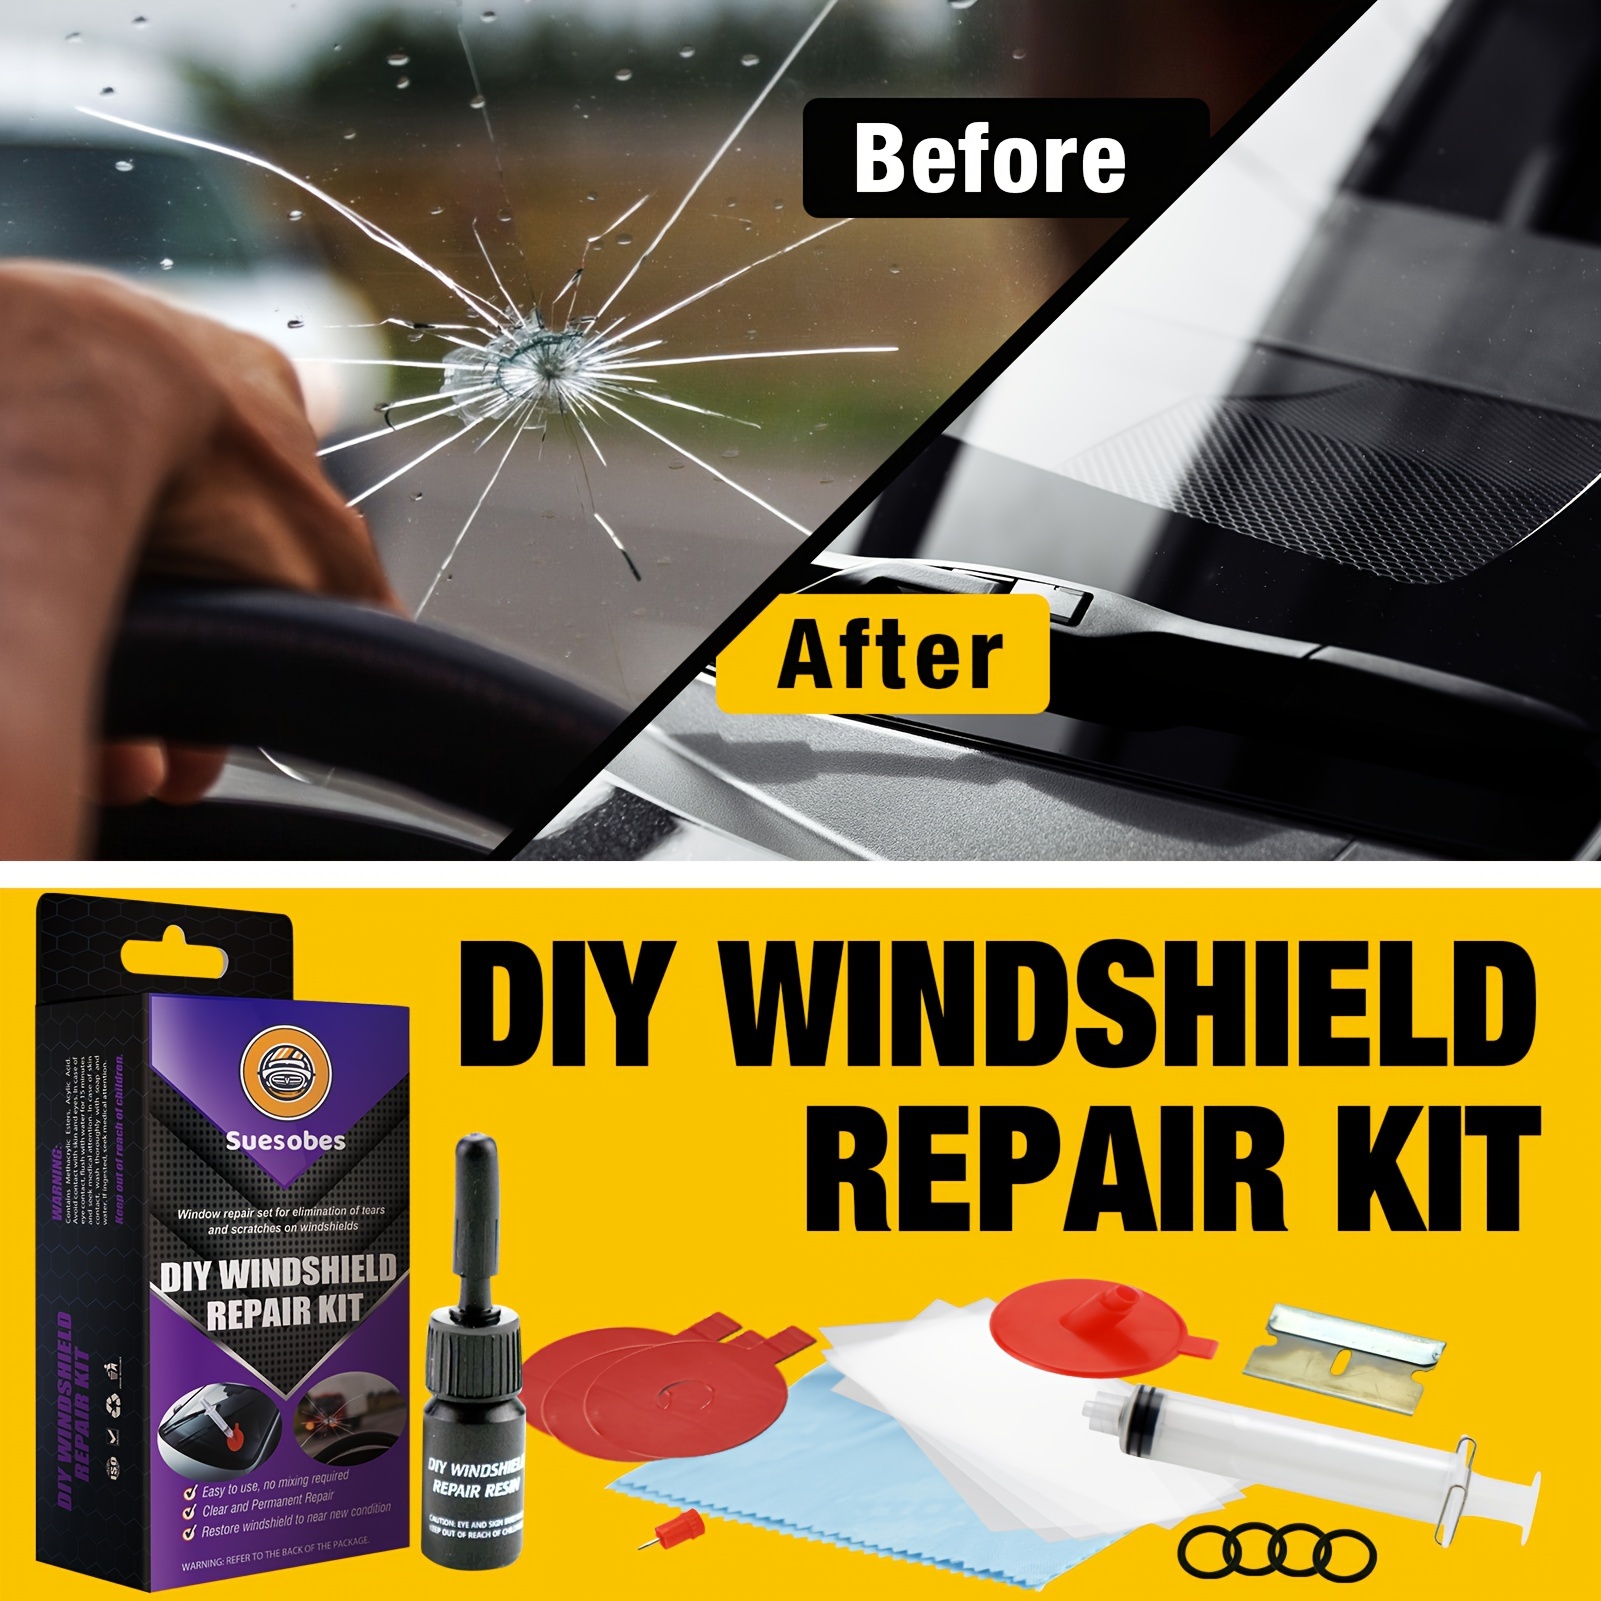 

Diy Windshield Repair Kit-the Car Windshield Crack Scratch Free Repair Tool Set Can Repair 3 Times